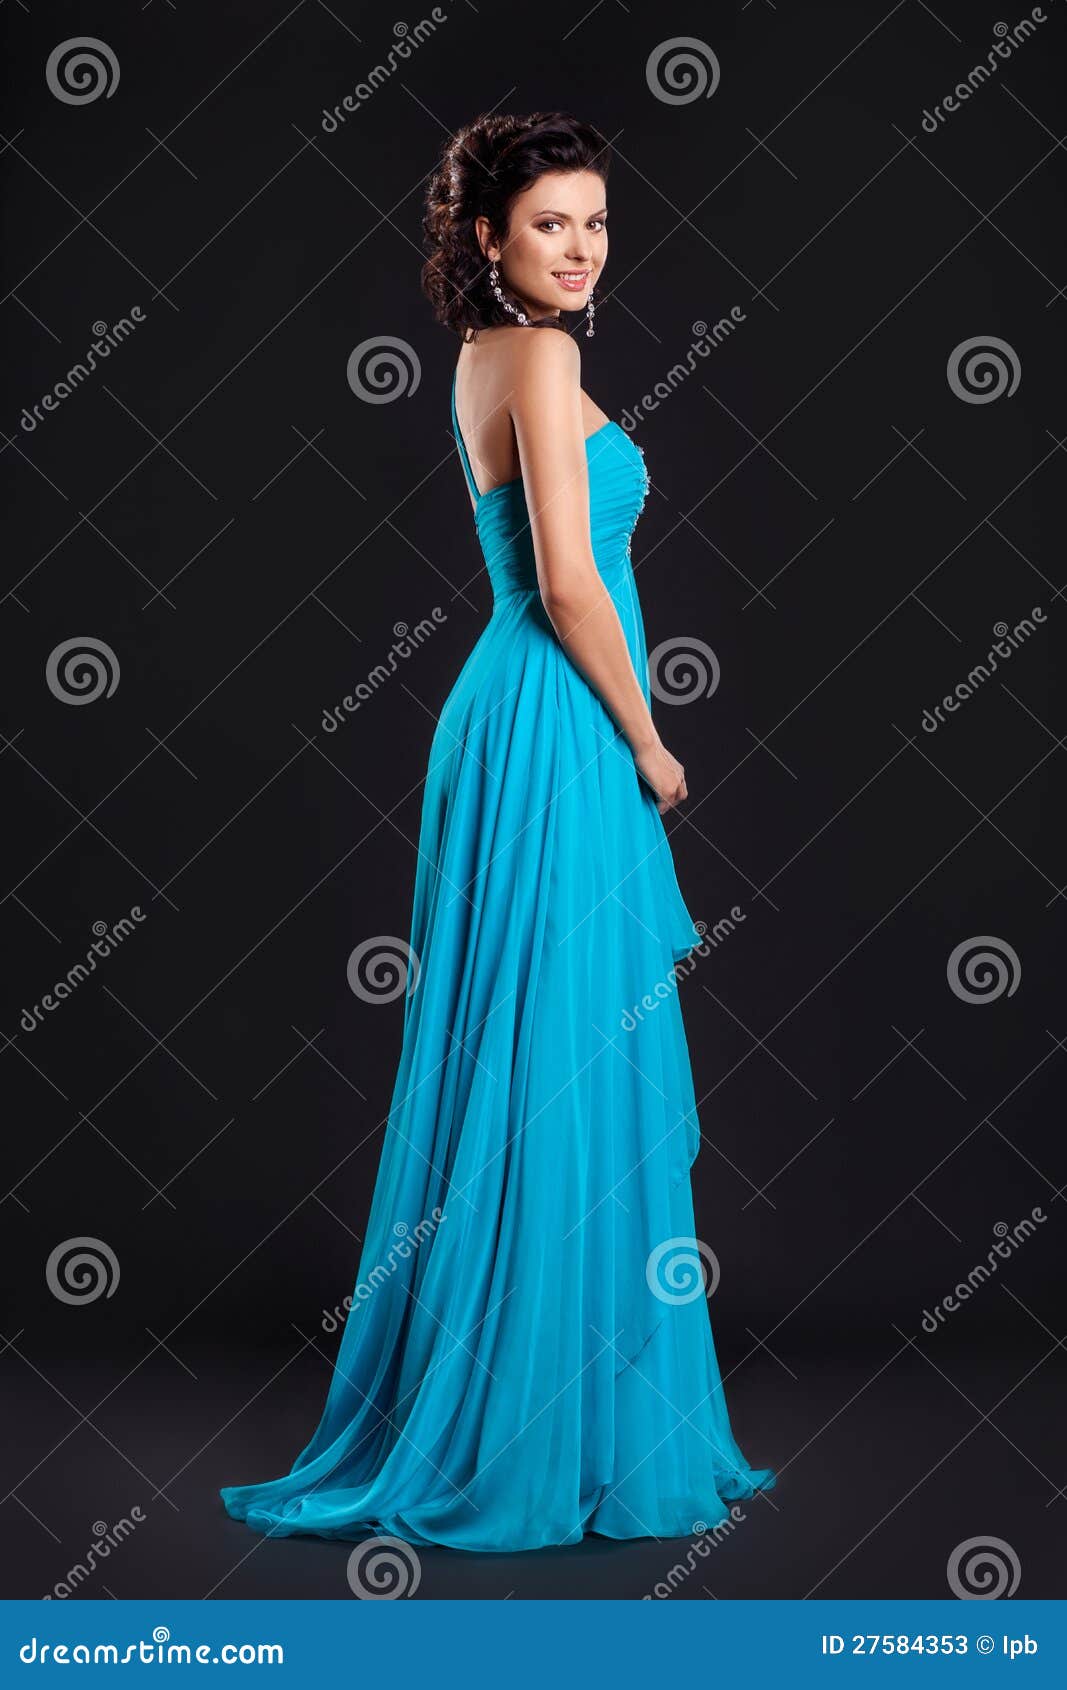 fashion woman in funky blue long dress smiling